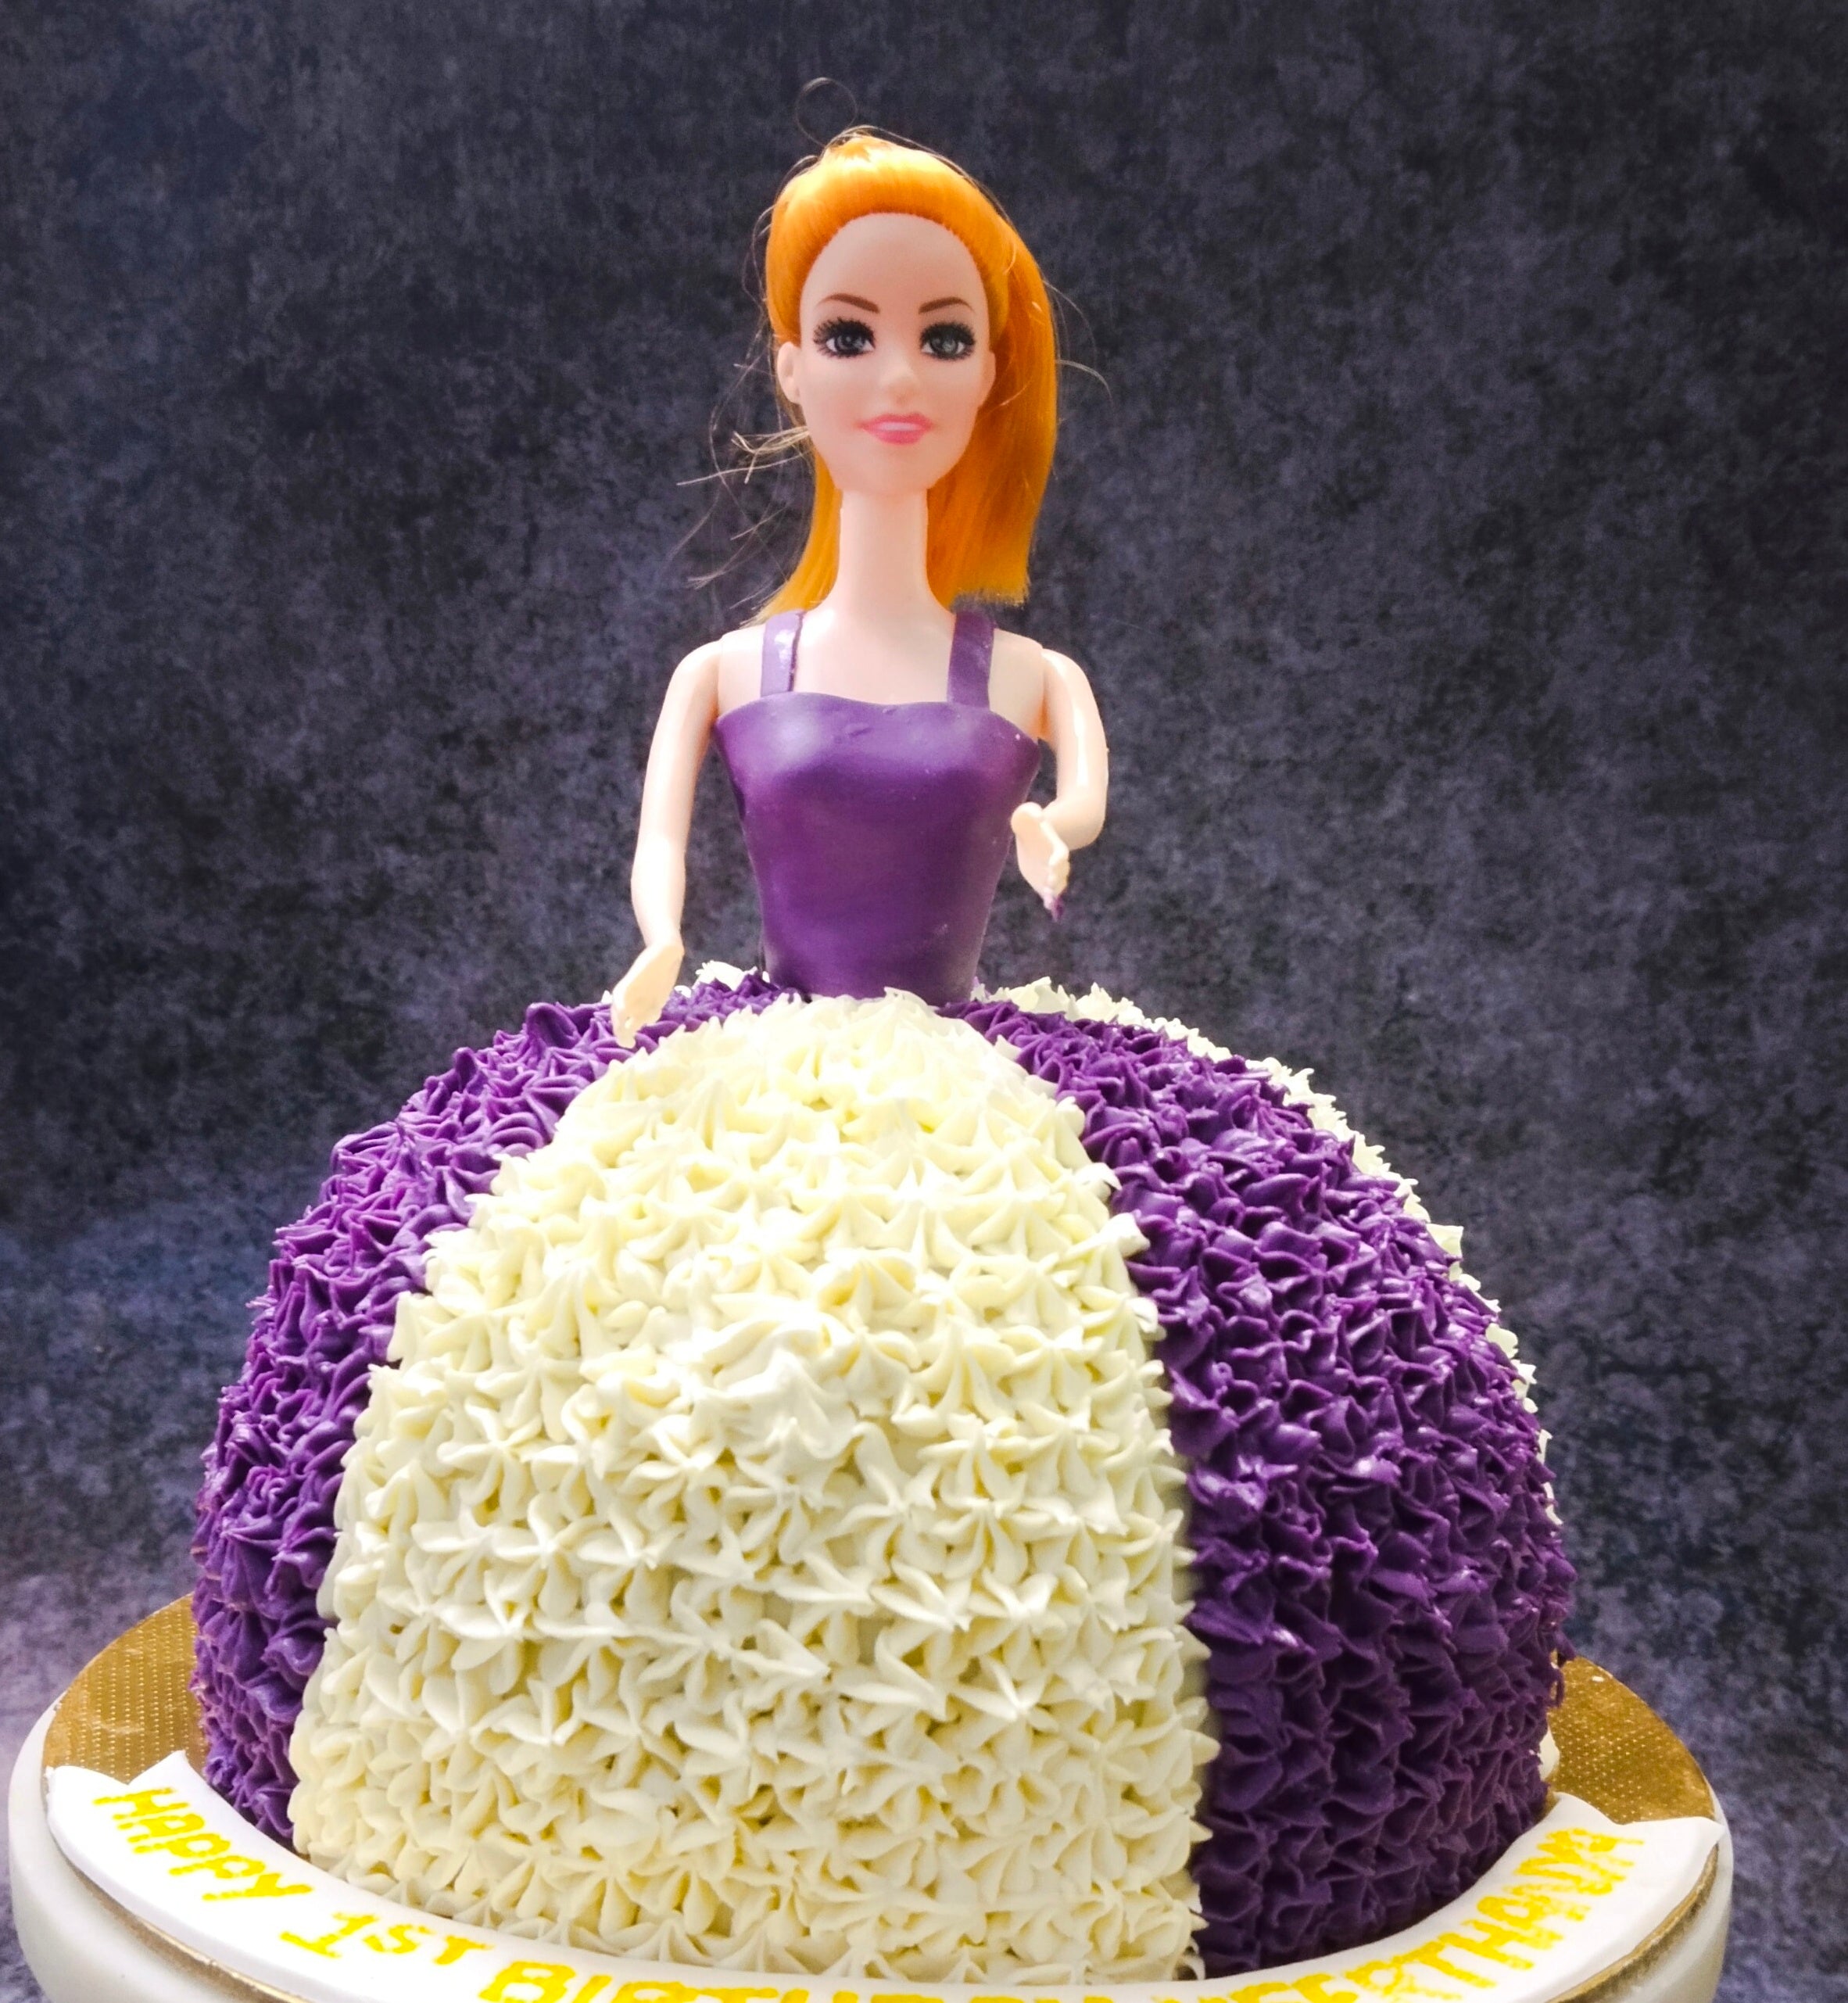 Two Amazing Barbie doll cake Design |Doll cake |Girl Birthday cake  decorating - YouTube